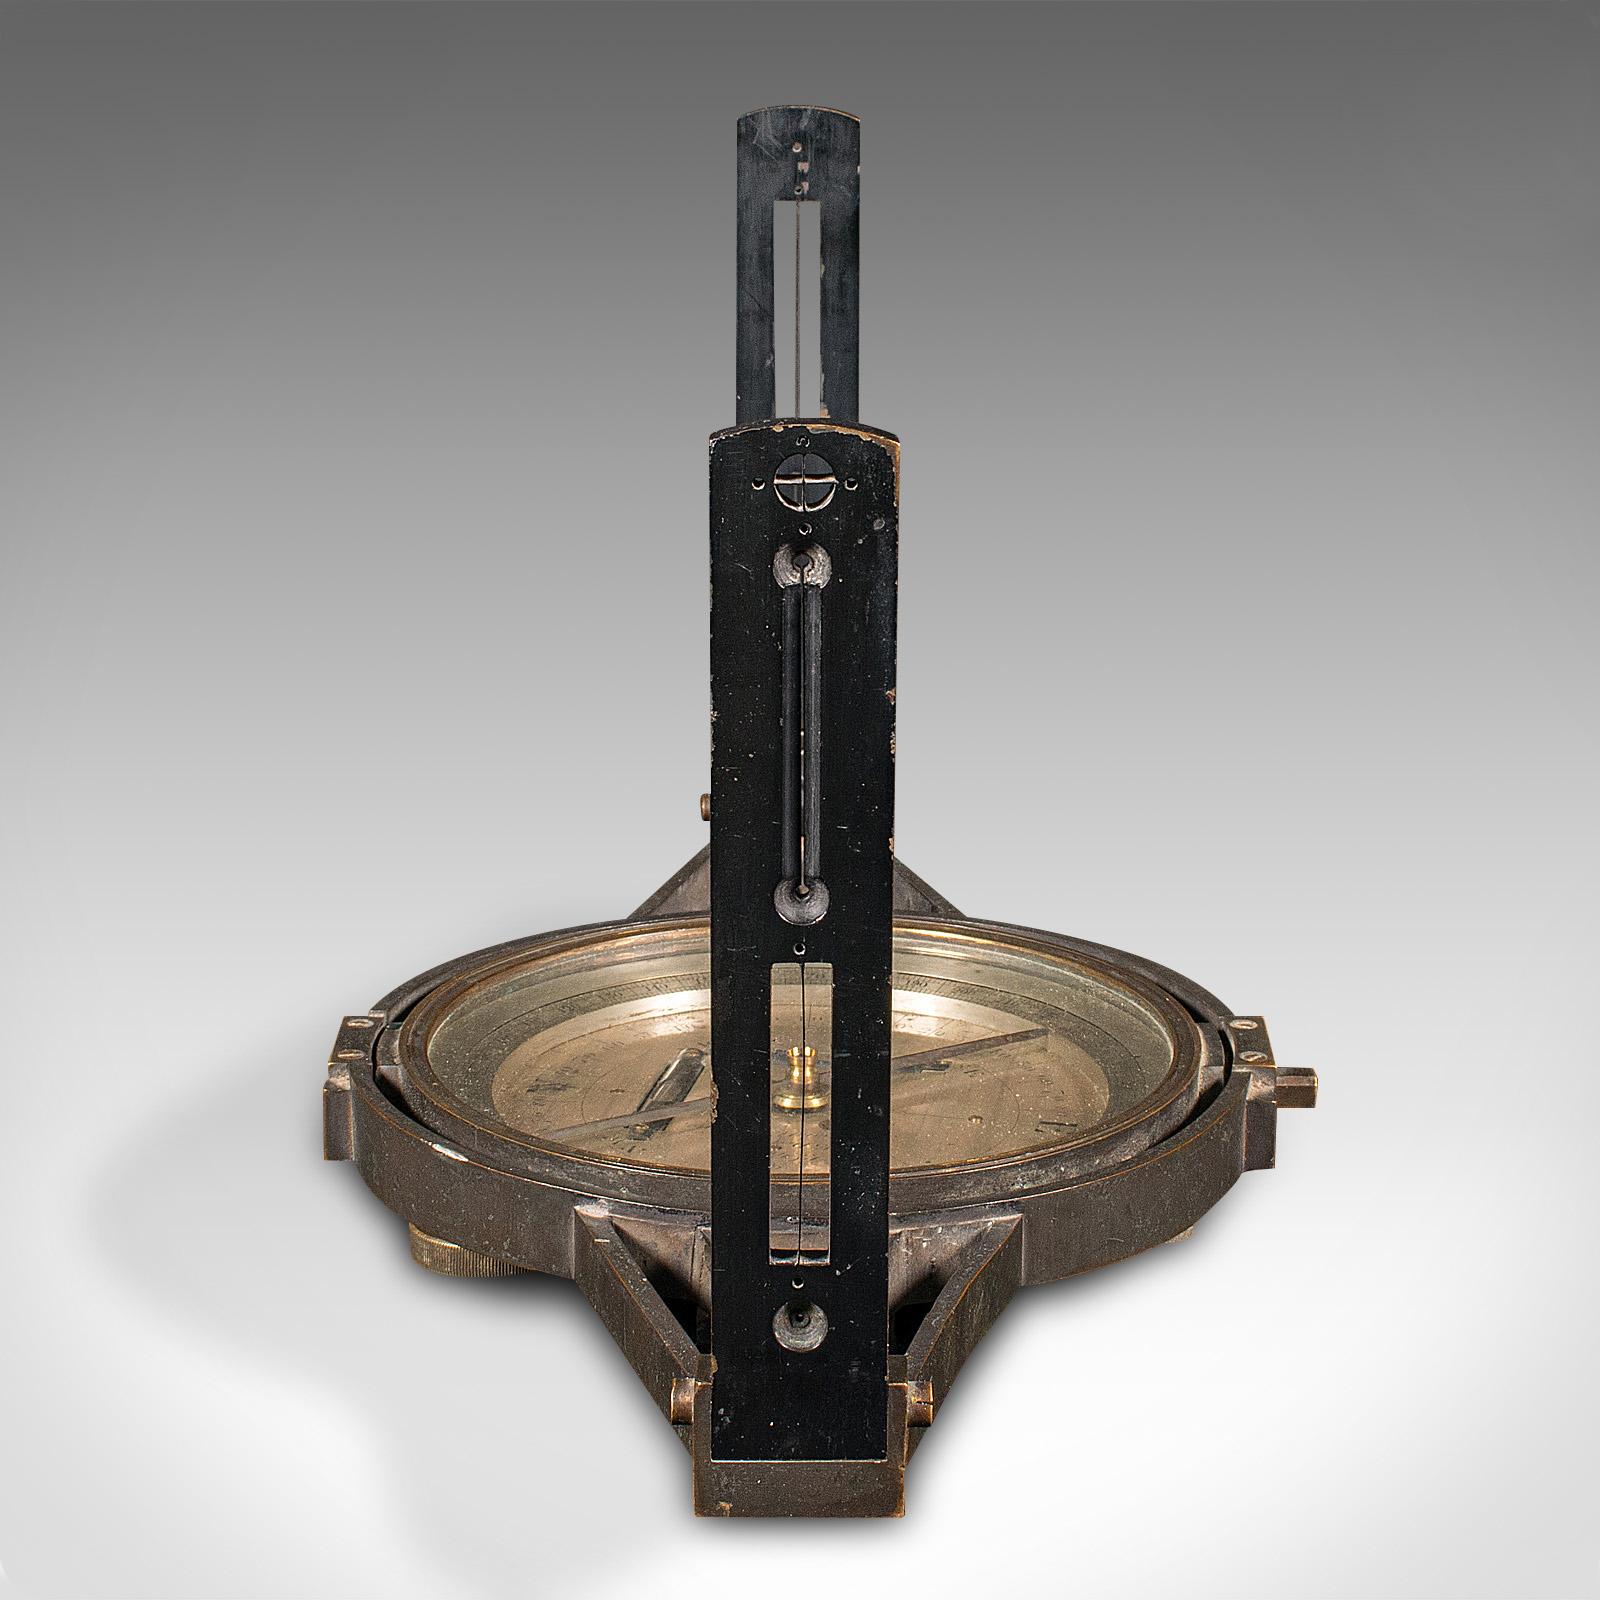 19th Century Antique Gimballed Compass, English, Brass Scientific Instrument, Victorian, 1900